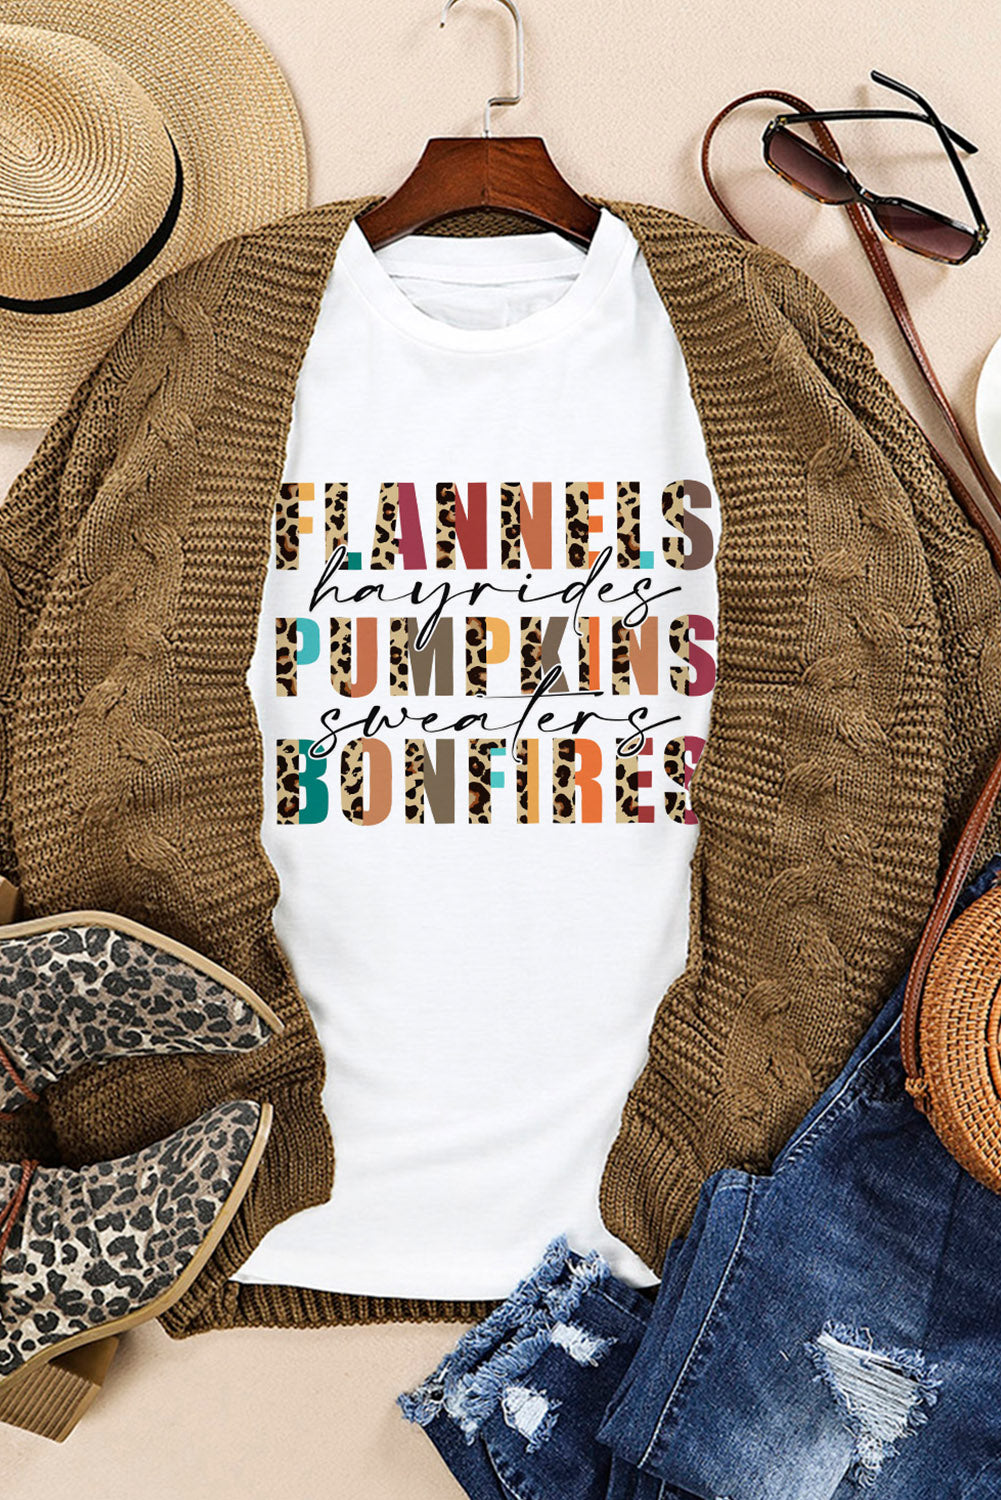 White Flannels Hayrides Pumpkins Sweaters Bonfires Tee